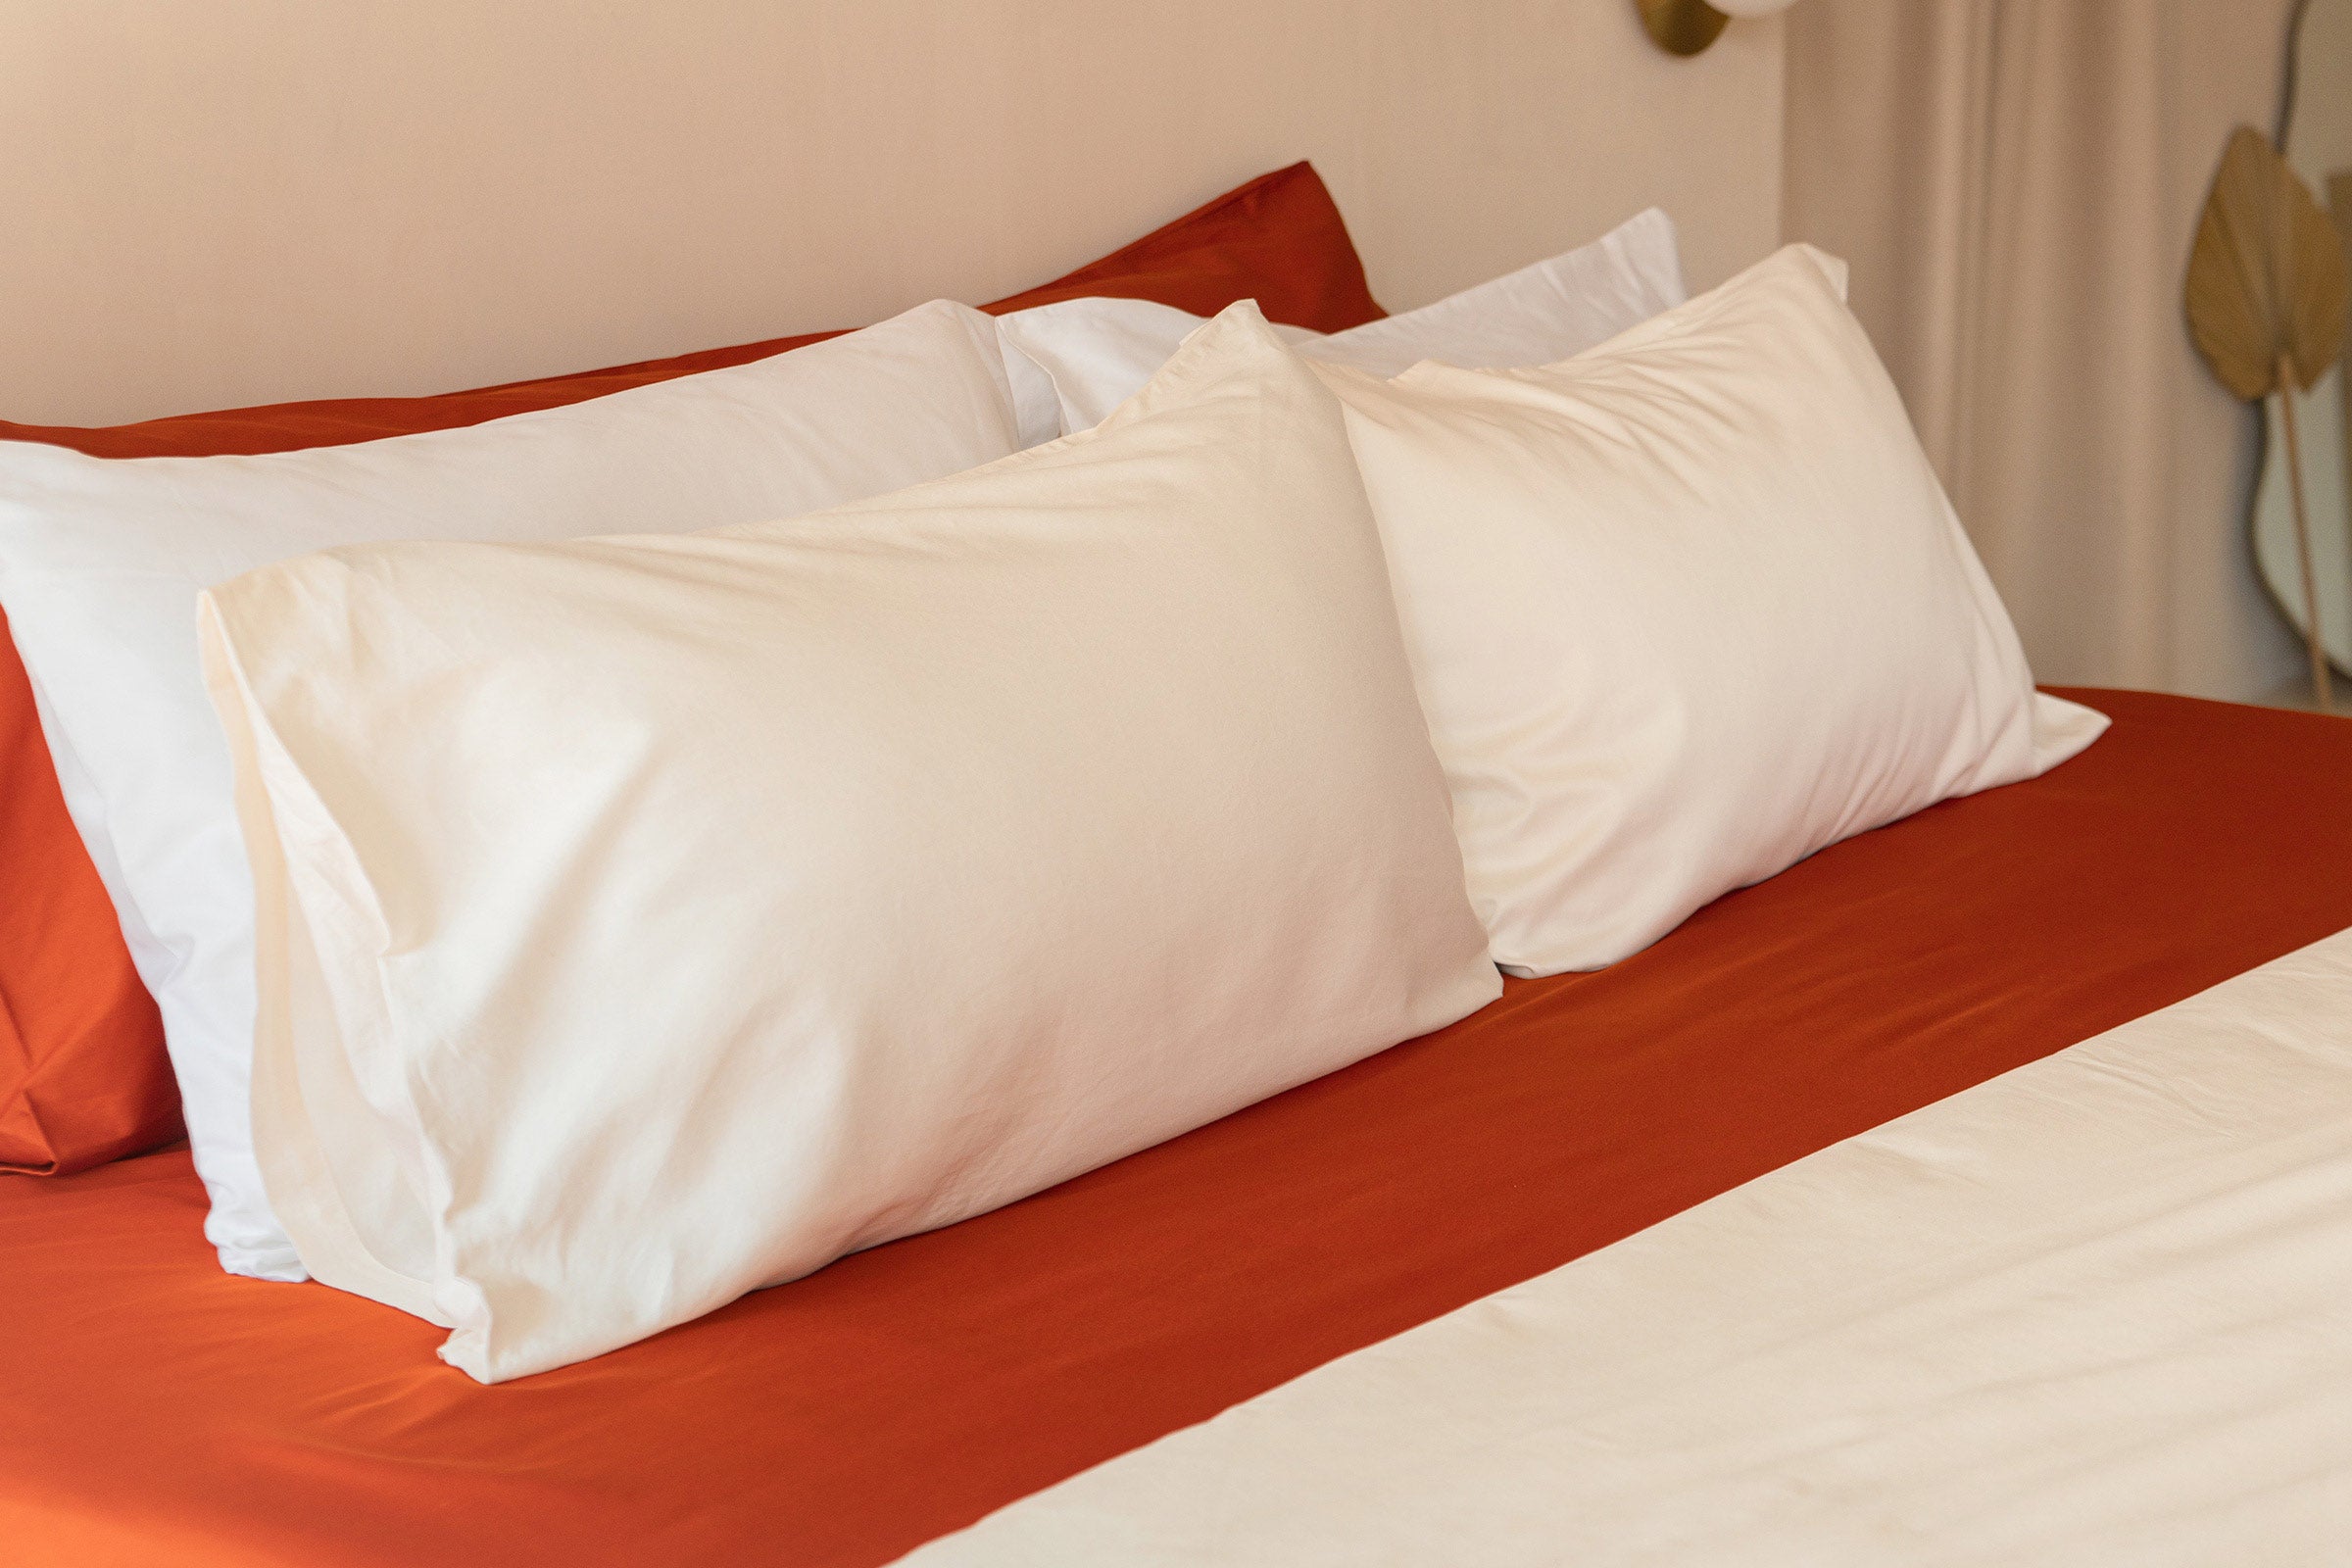 classic-autumn-fitted-sheet-body-pillow-natural-duvet-cover-pillowcase-pair-white-pillowcase-pair-by-sojao.jpg